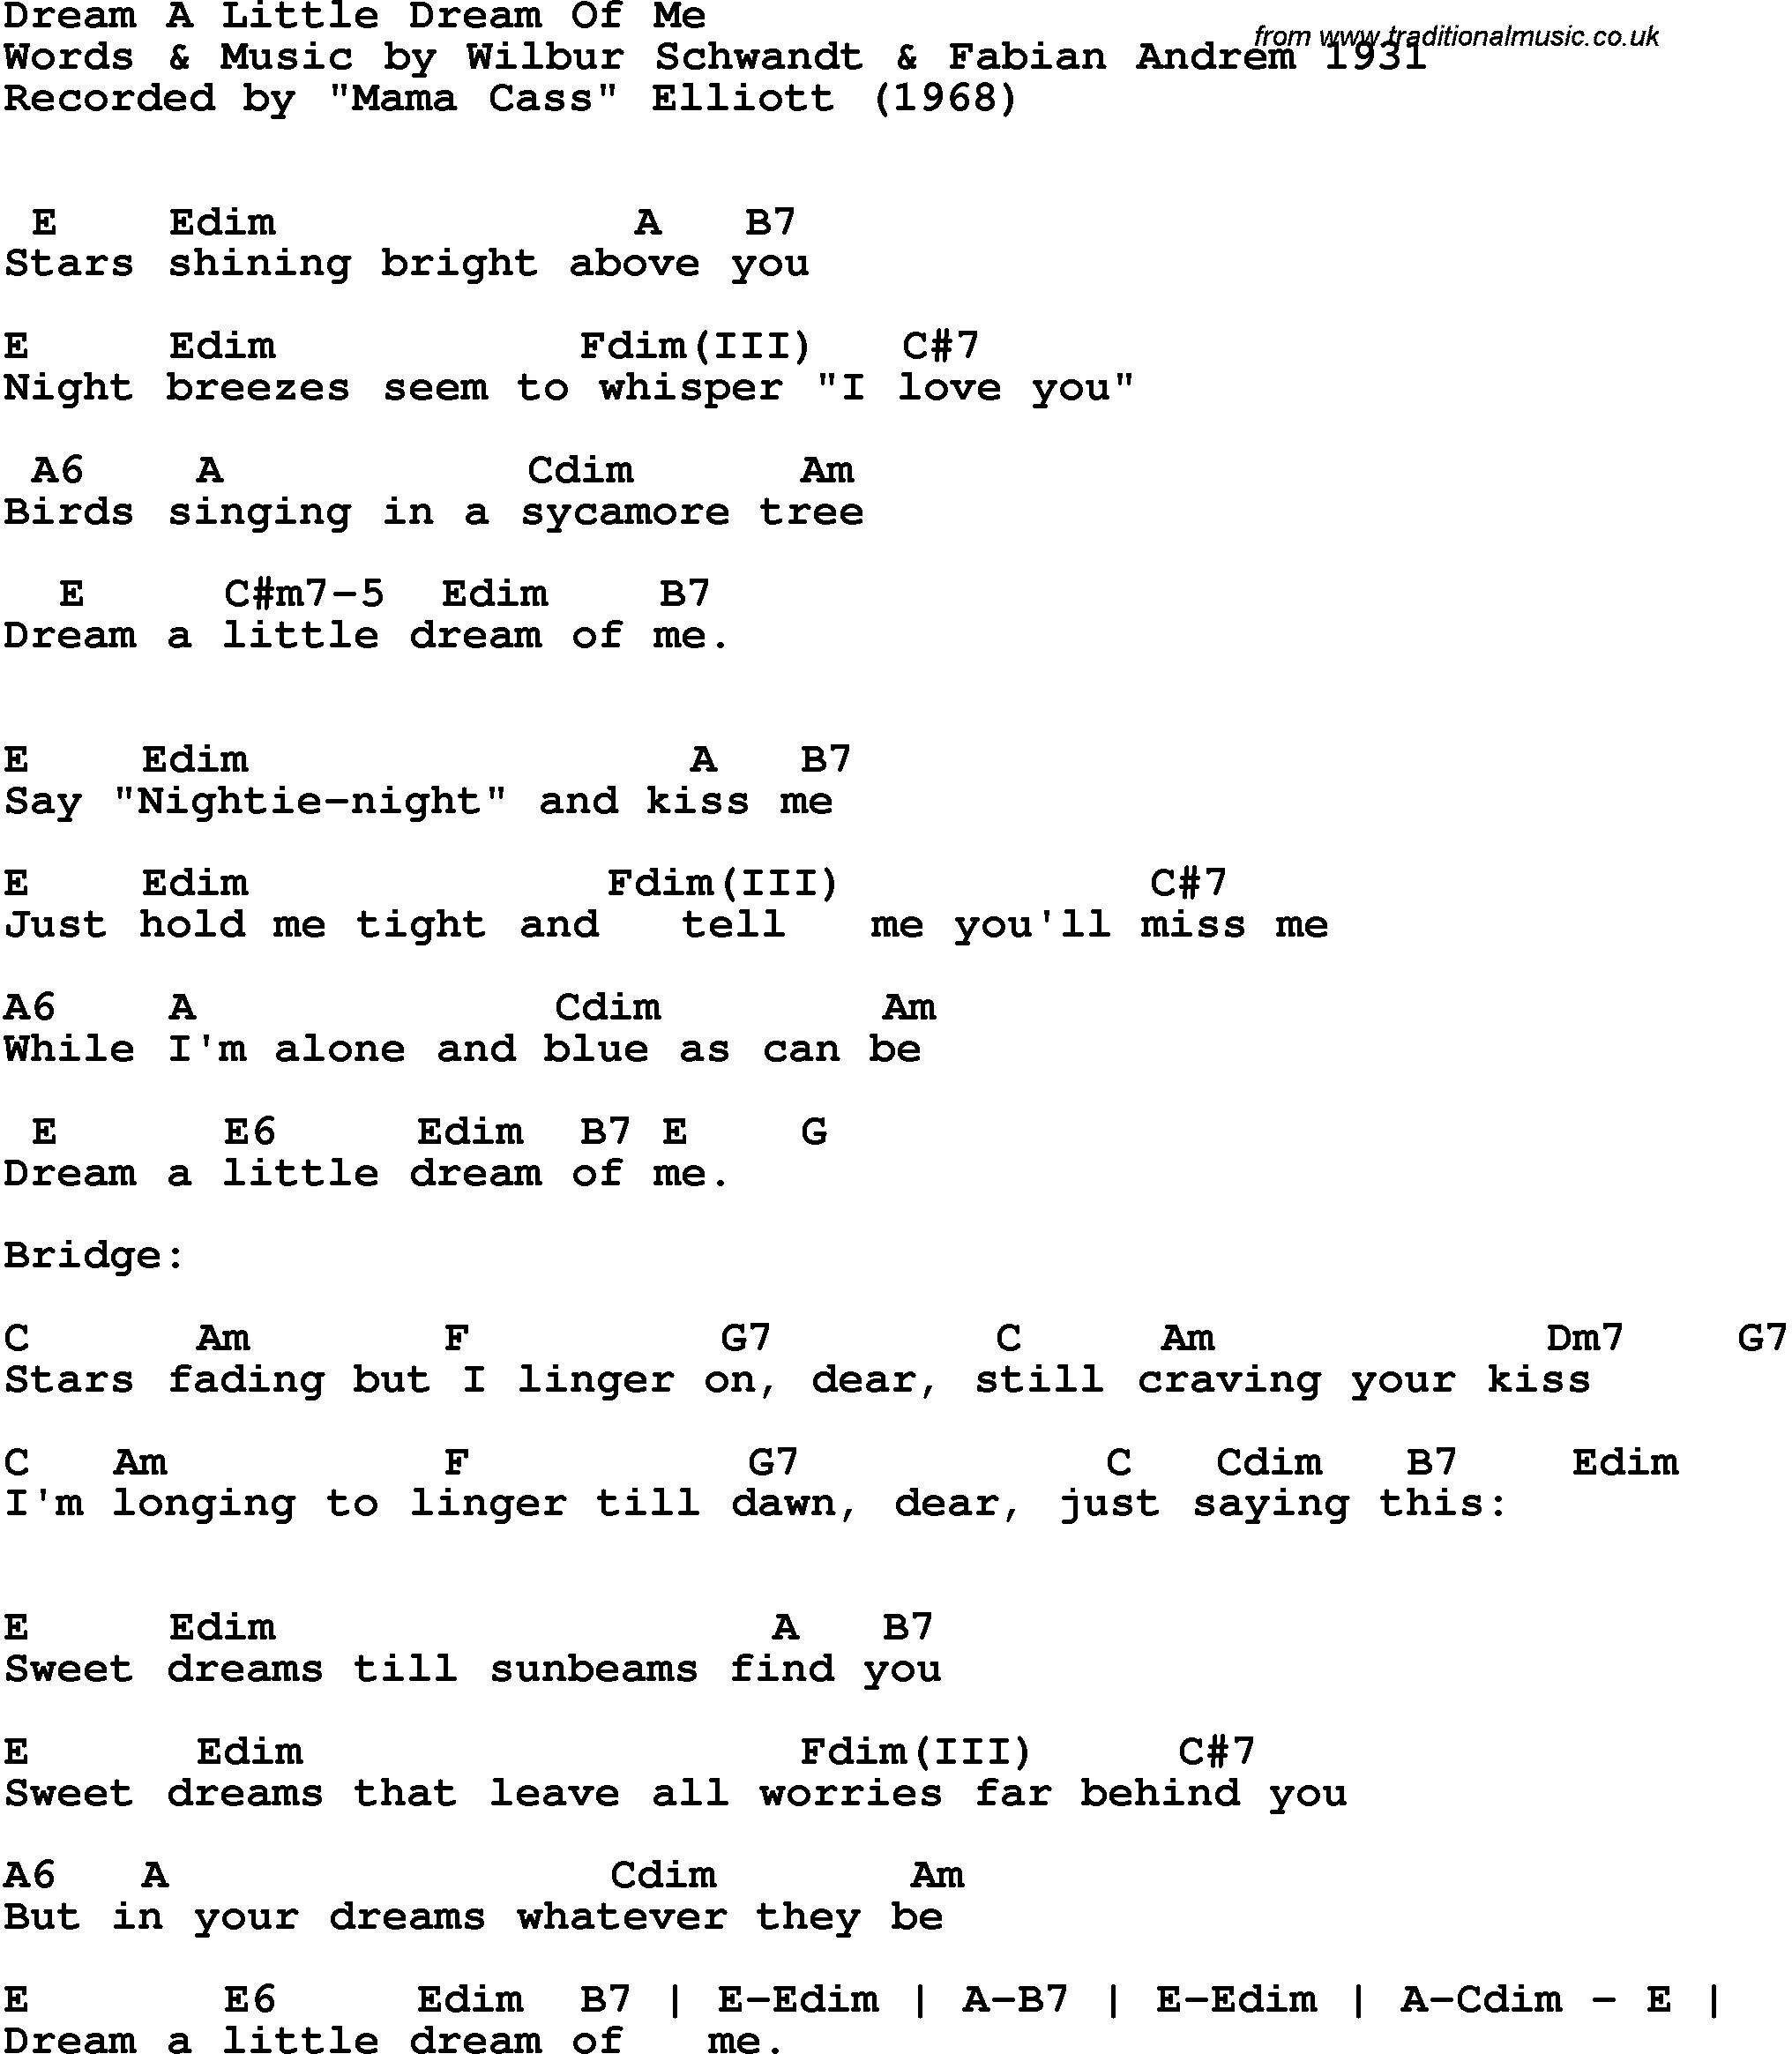 Song Lyrics with guitar chords for Dream A Little Dream Of Me - Mama Cass Elliott, 1968